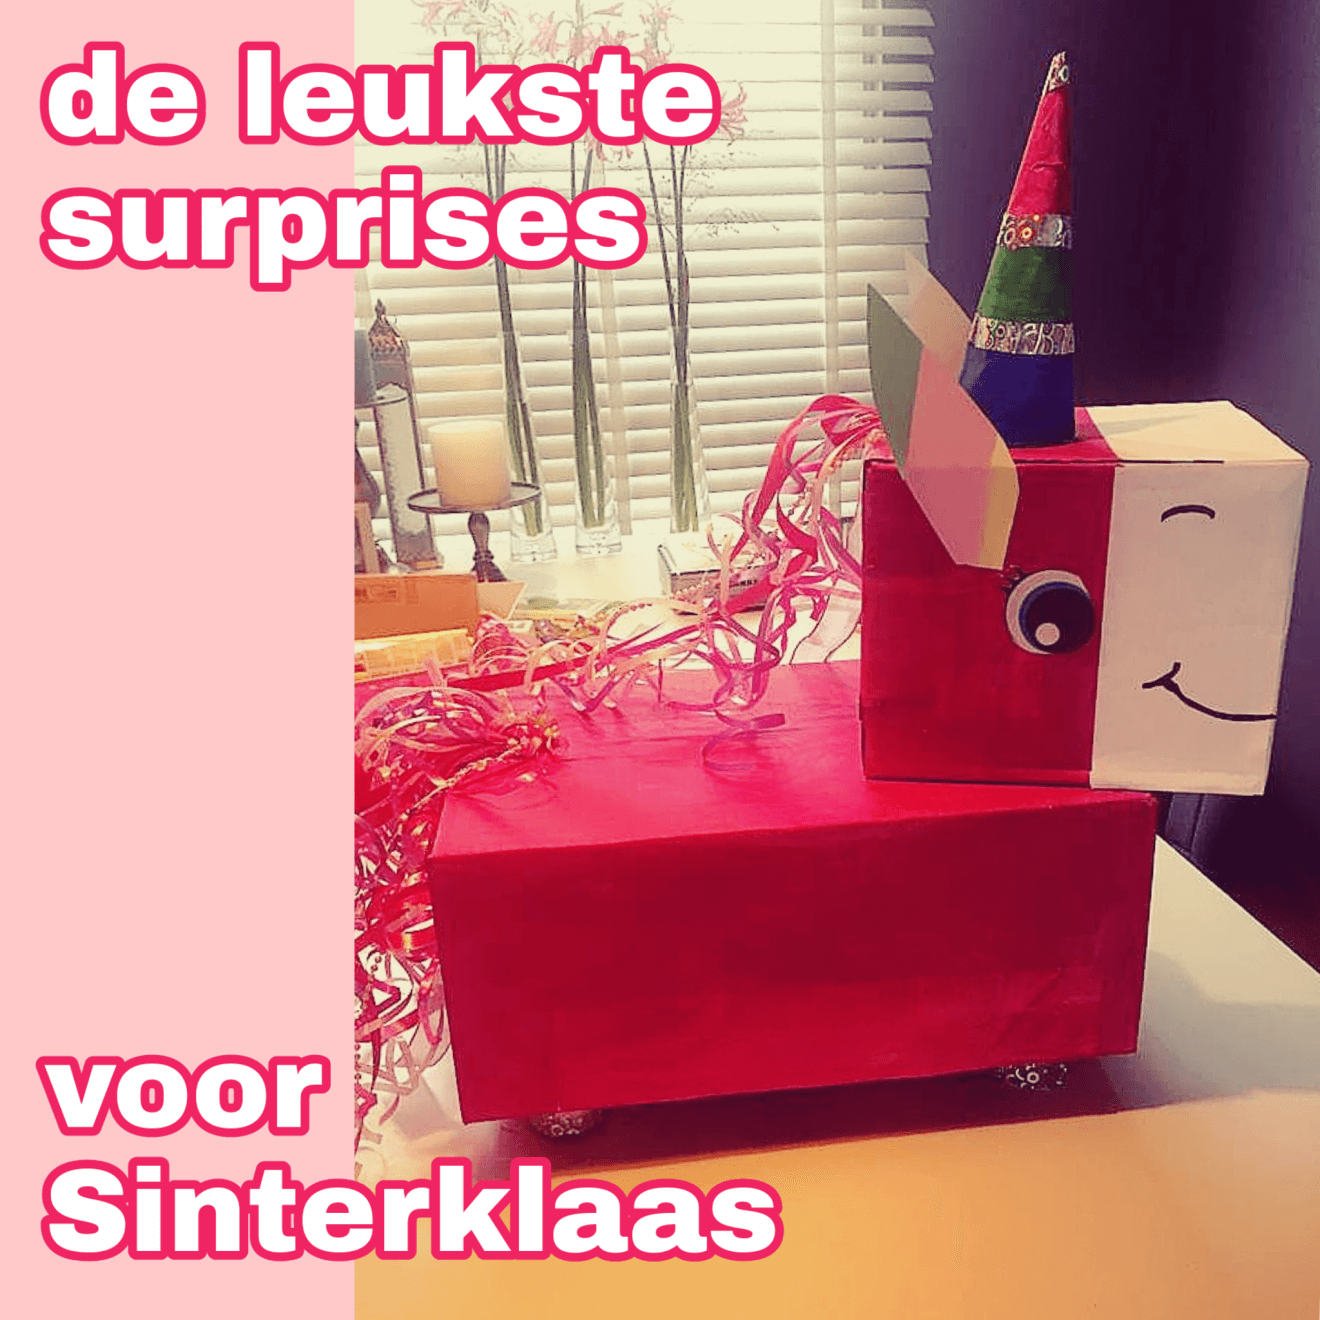 De leukste Sinterklaas surprises